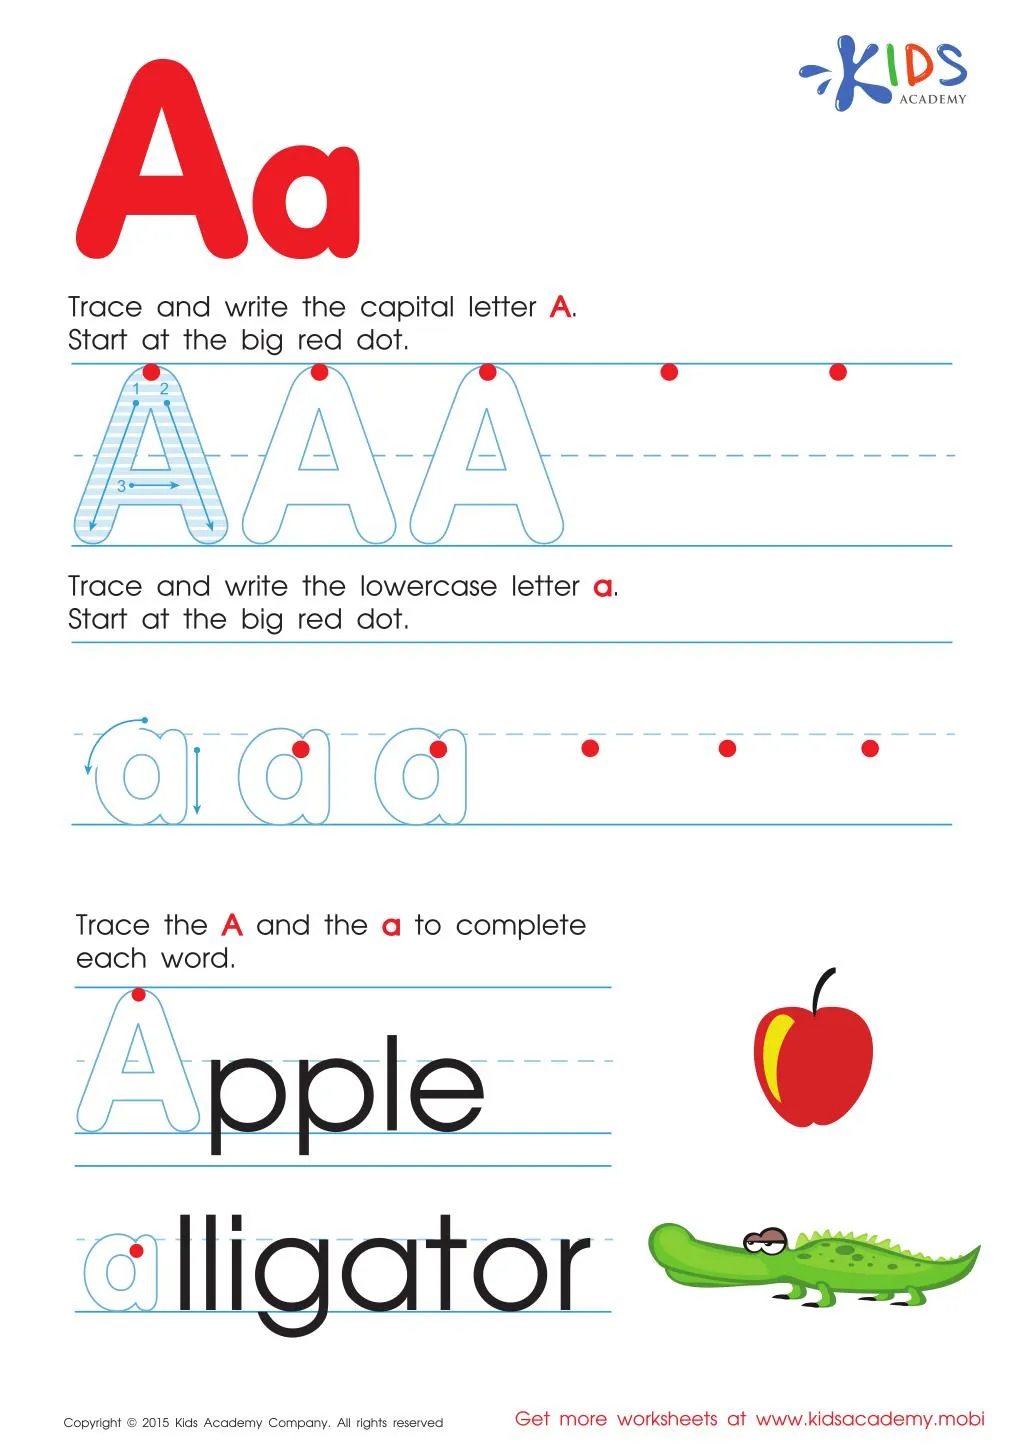 traceable-alphabet-letters-101-printable-writing-the-letter-b-worksheets-99worksheets-edgar